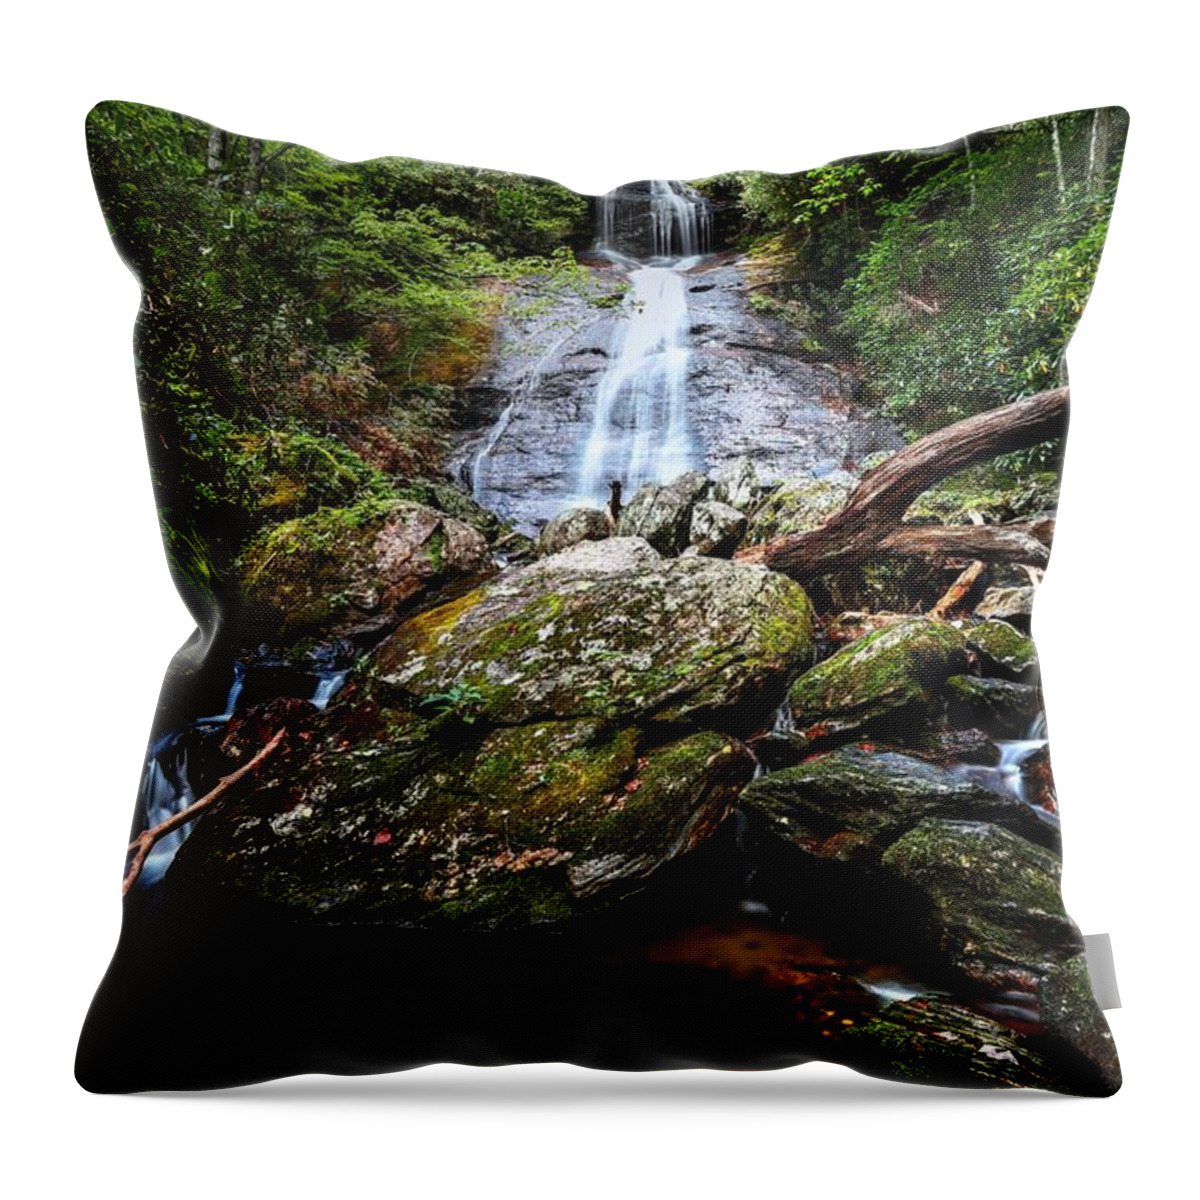 Dill Falls Throw Pillow featuring the photograph Dill Falls North Carolina by Carol Montoya